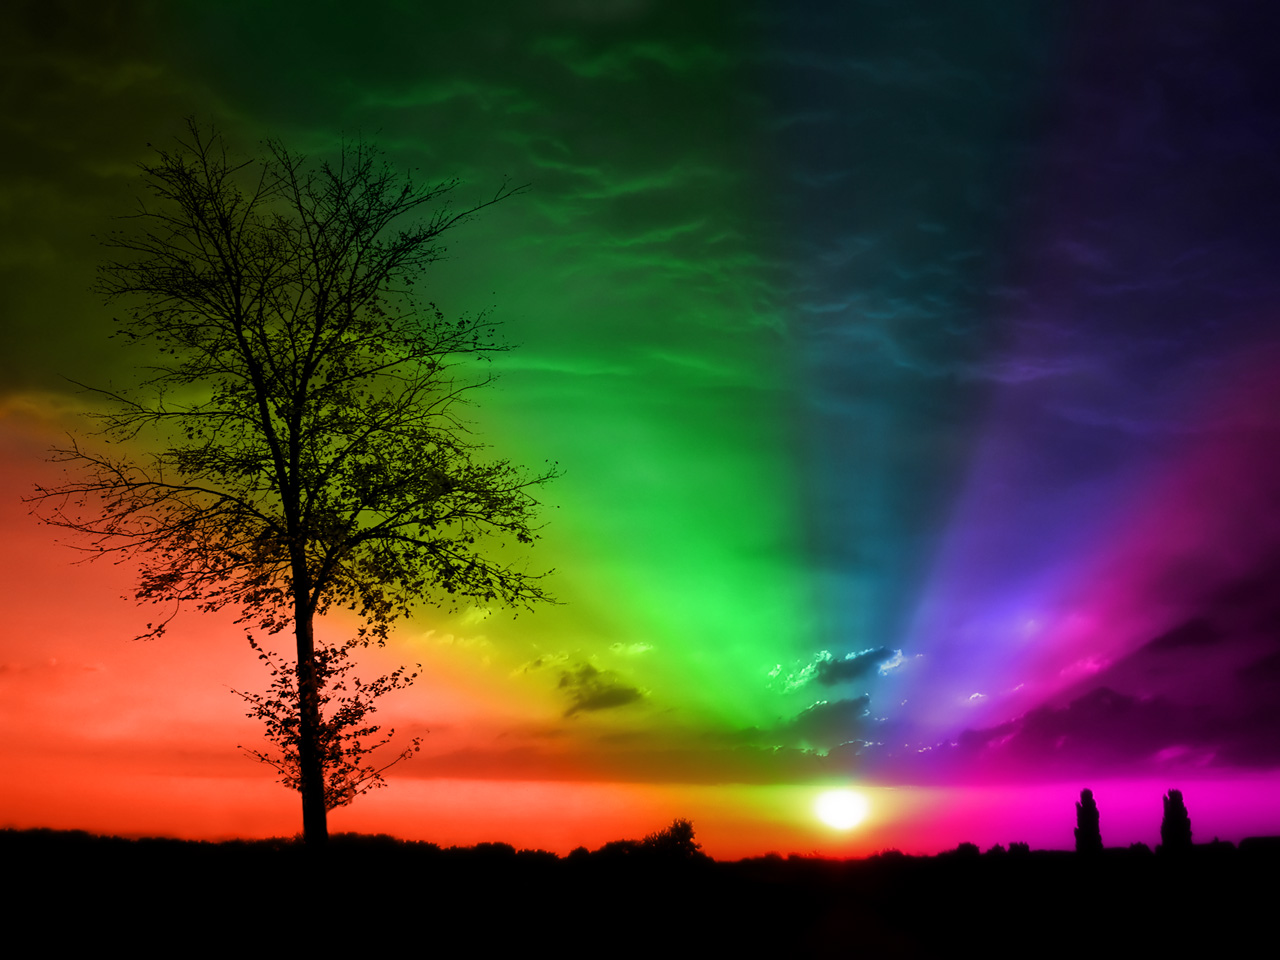 https://blogger.googleusercontent.com/img/b/R29vZ2xl/AVvXsEh3_oEp-_7_6fPMzloOw53x2gIyPT4m7oqCo0e07jUksXekm8jrdqThxnqKXjC6ZJL9WIi9SBWIBM0HB4GNgdTAVL6YuoBeWDo121mdUXFFNs5gR1kqKCgVNc9npD_5yPwdwsNtk8pUOHGP/s1600/sunset_rainbow_wallpaper_by_muckieh-d45uyzp.jpg